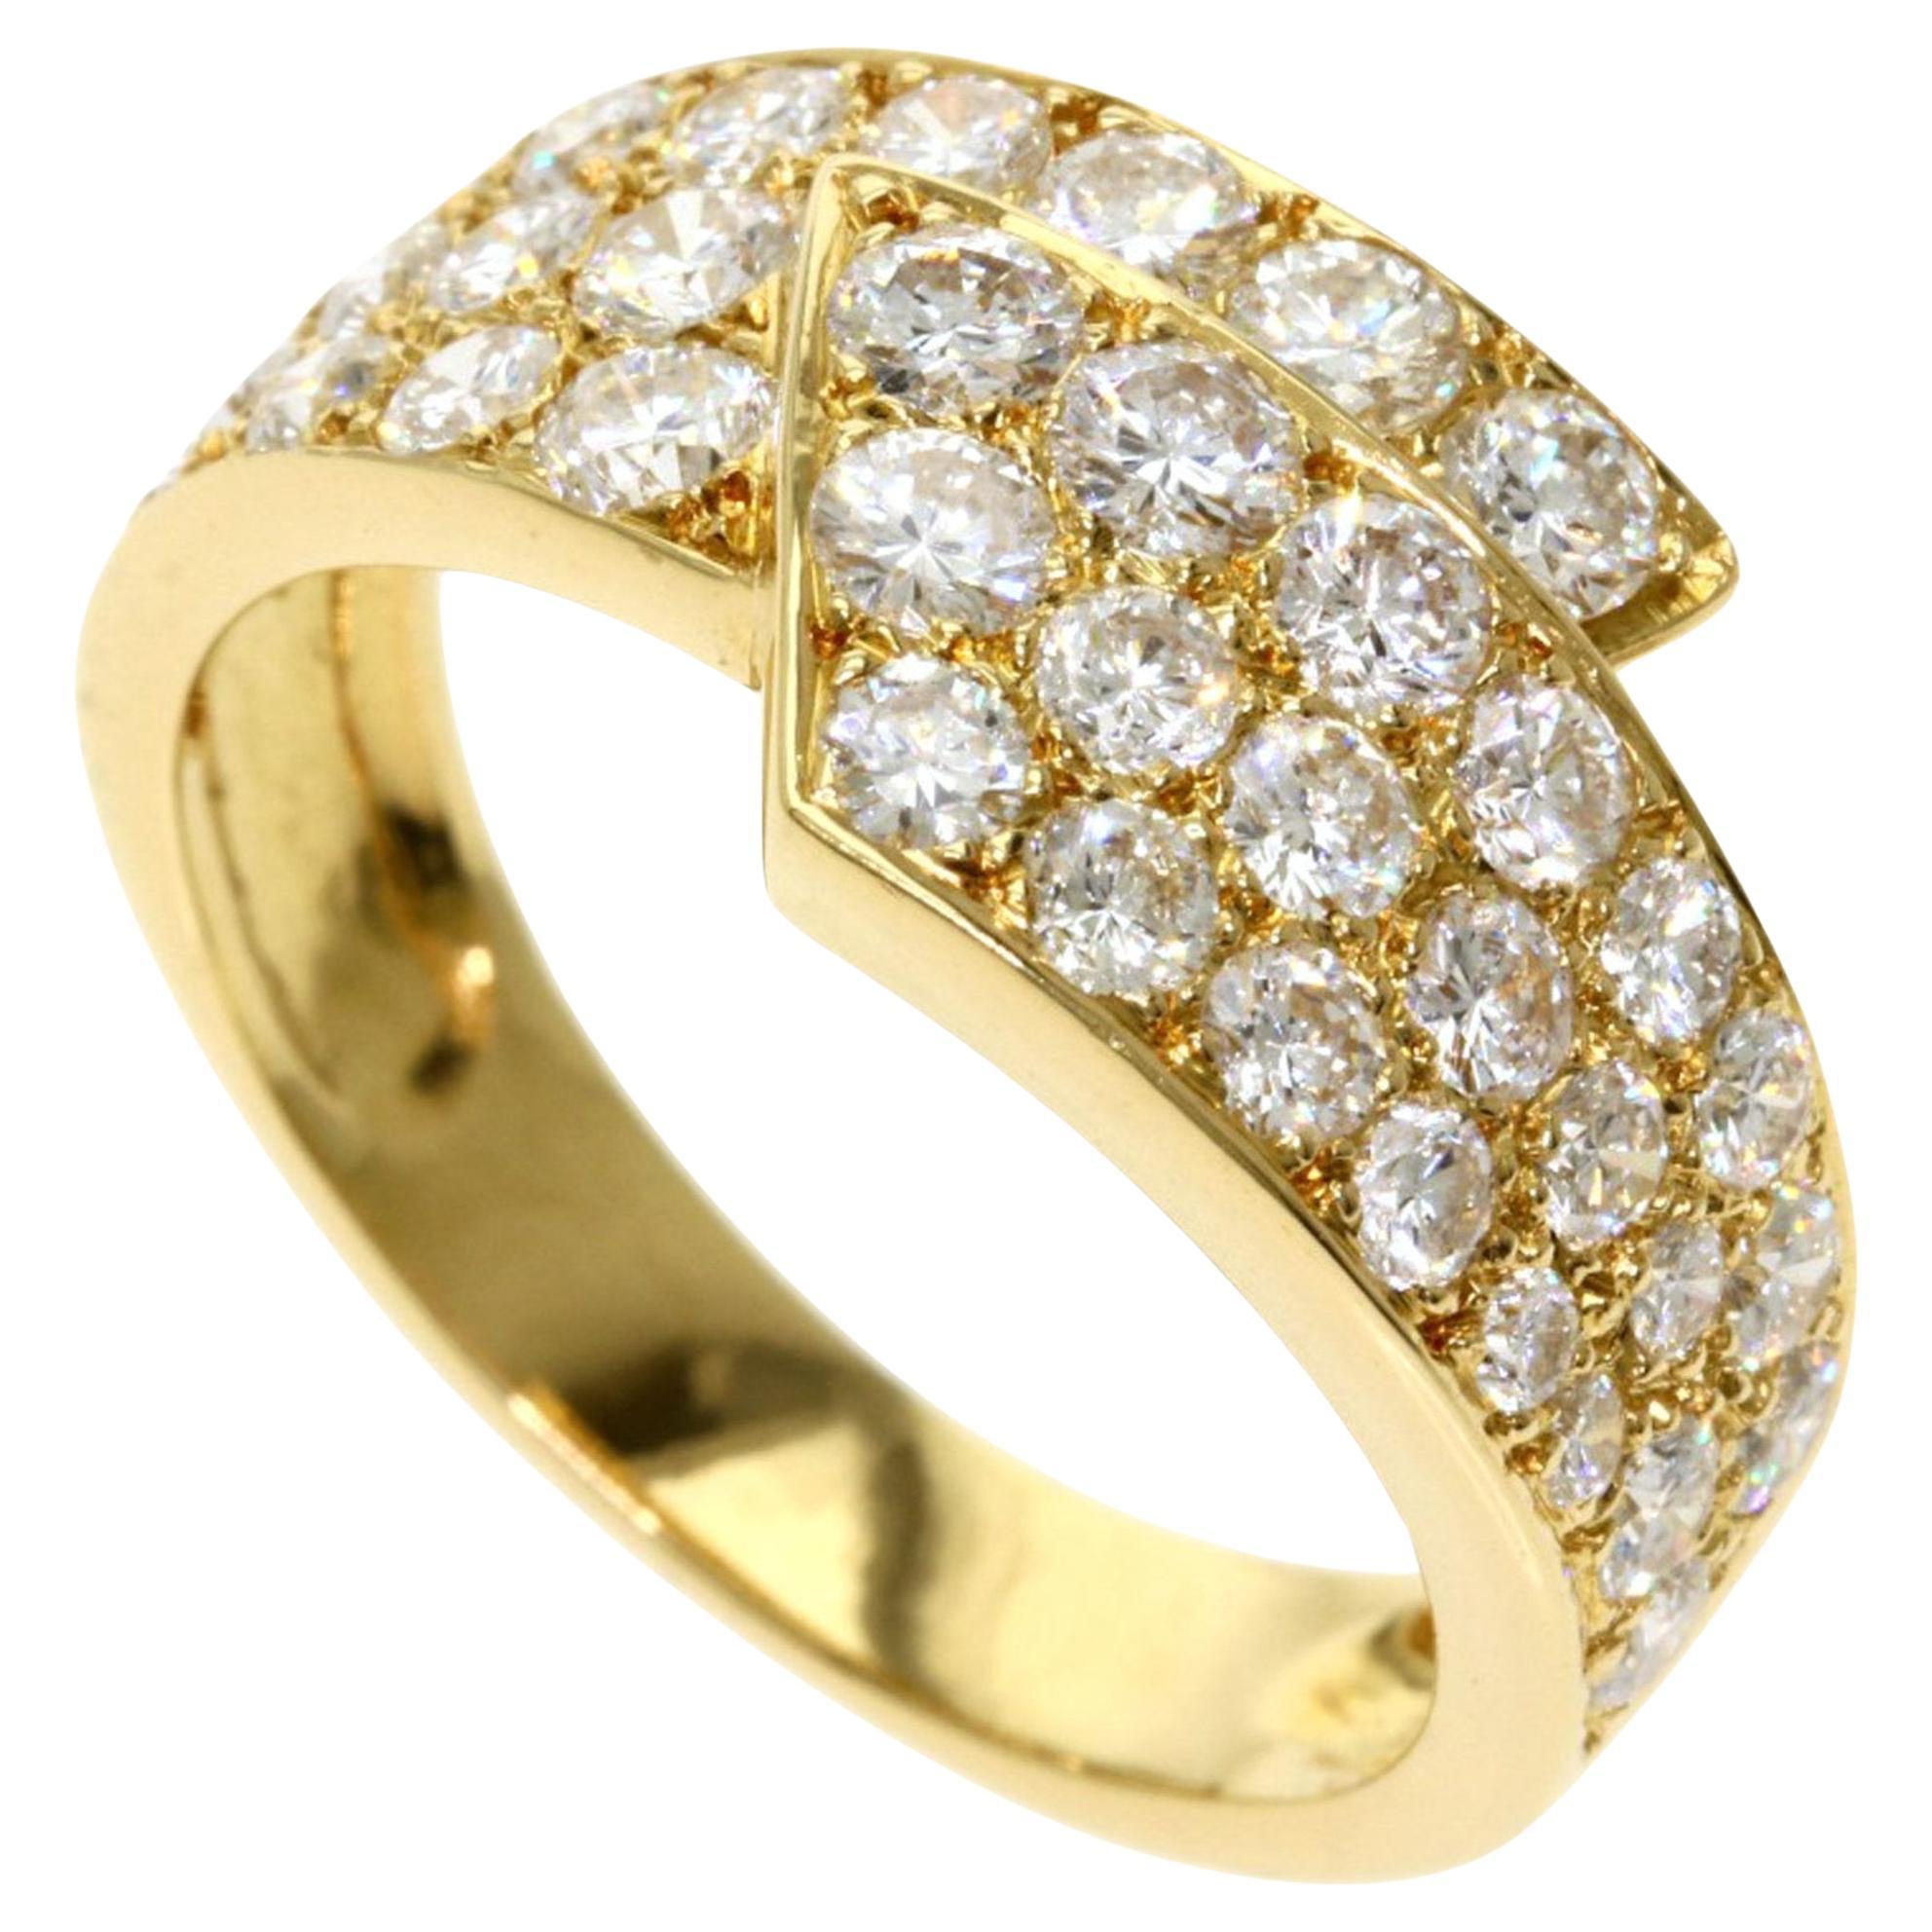 Van Cleef & Arpels Bagues à diamants en or jaune 18 carats